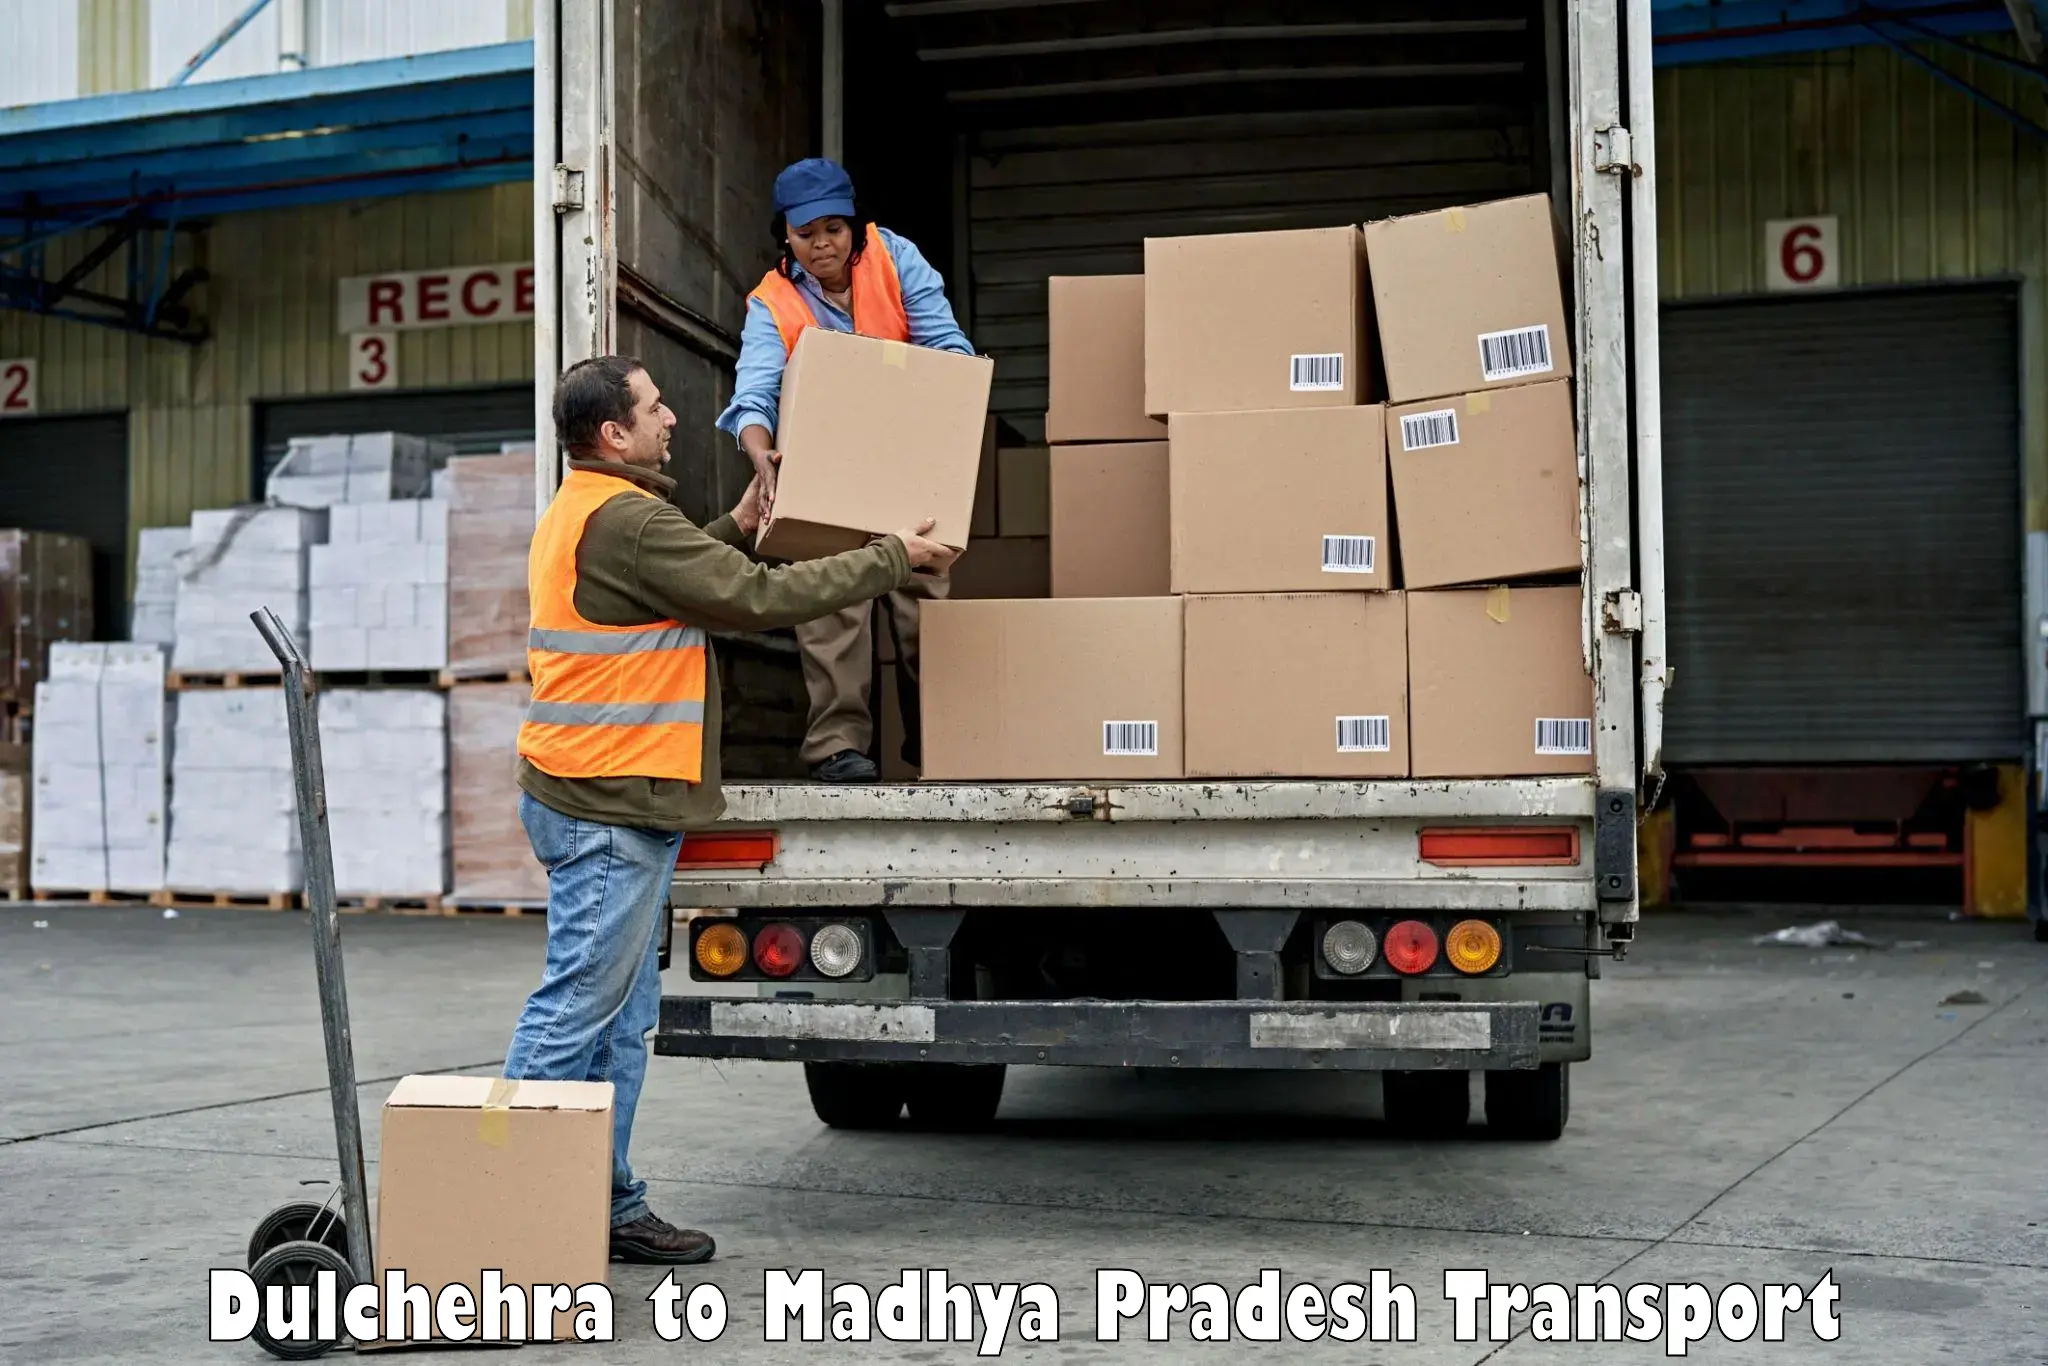 Truck transport companies in India Dulchehra to Tikamgarh